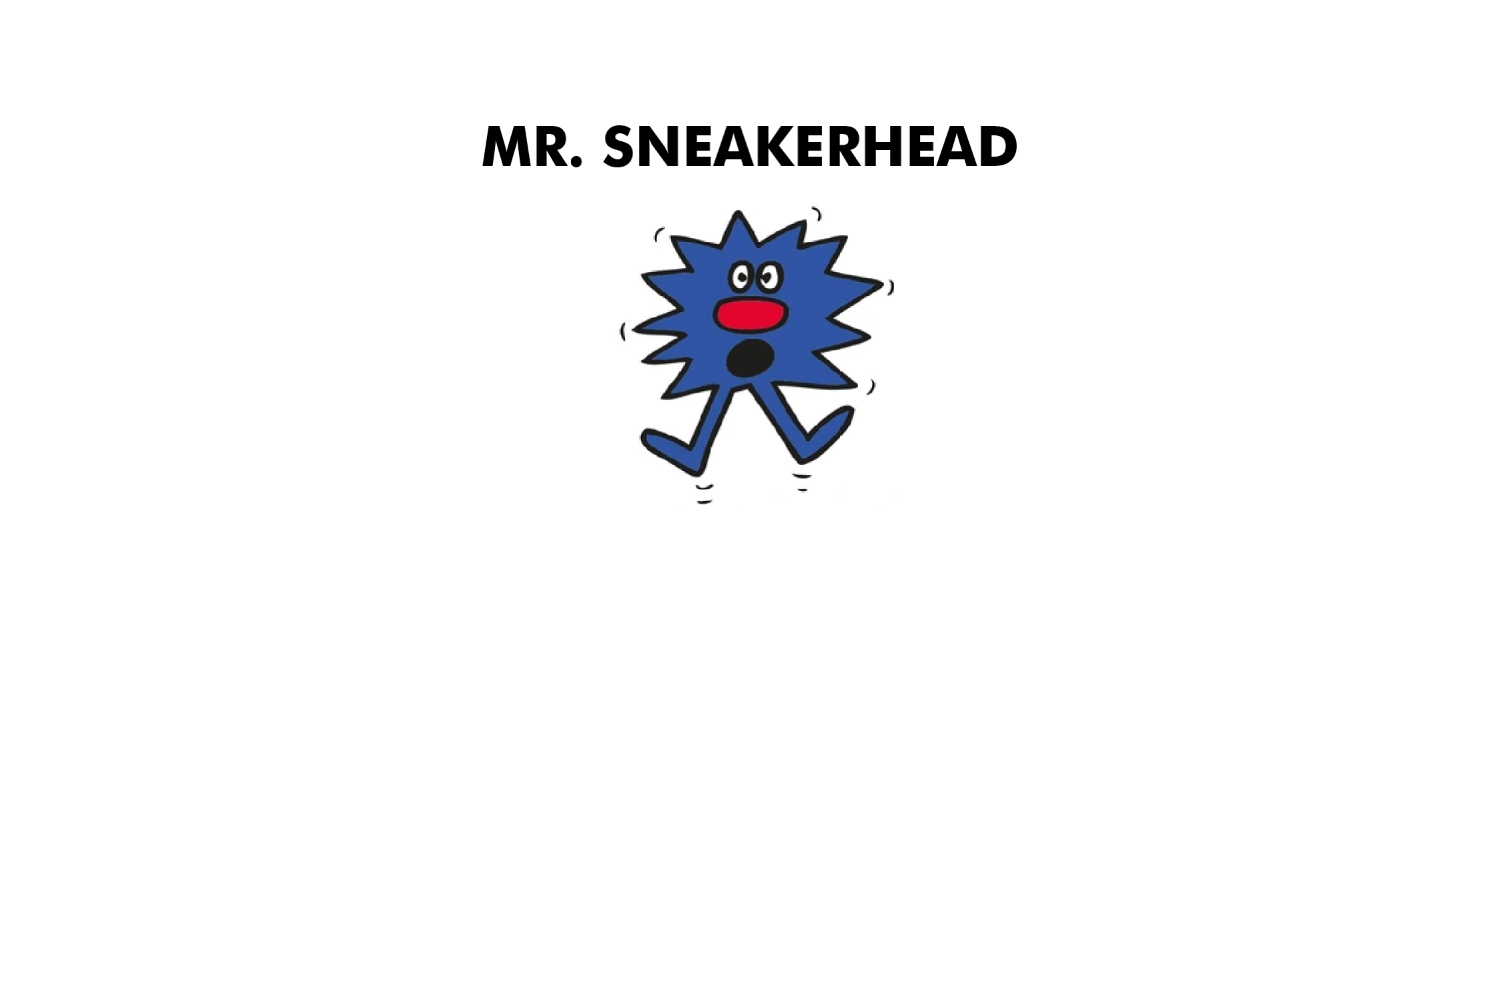 Mr. Sneakerhead